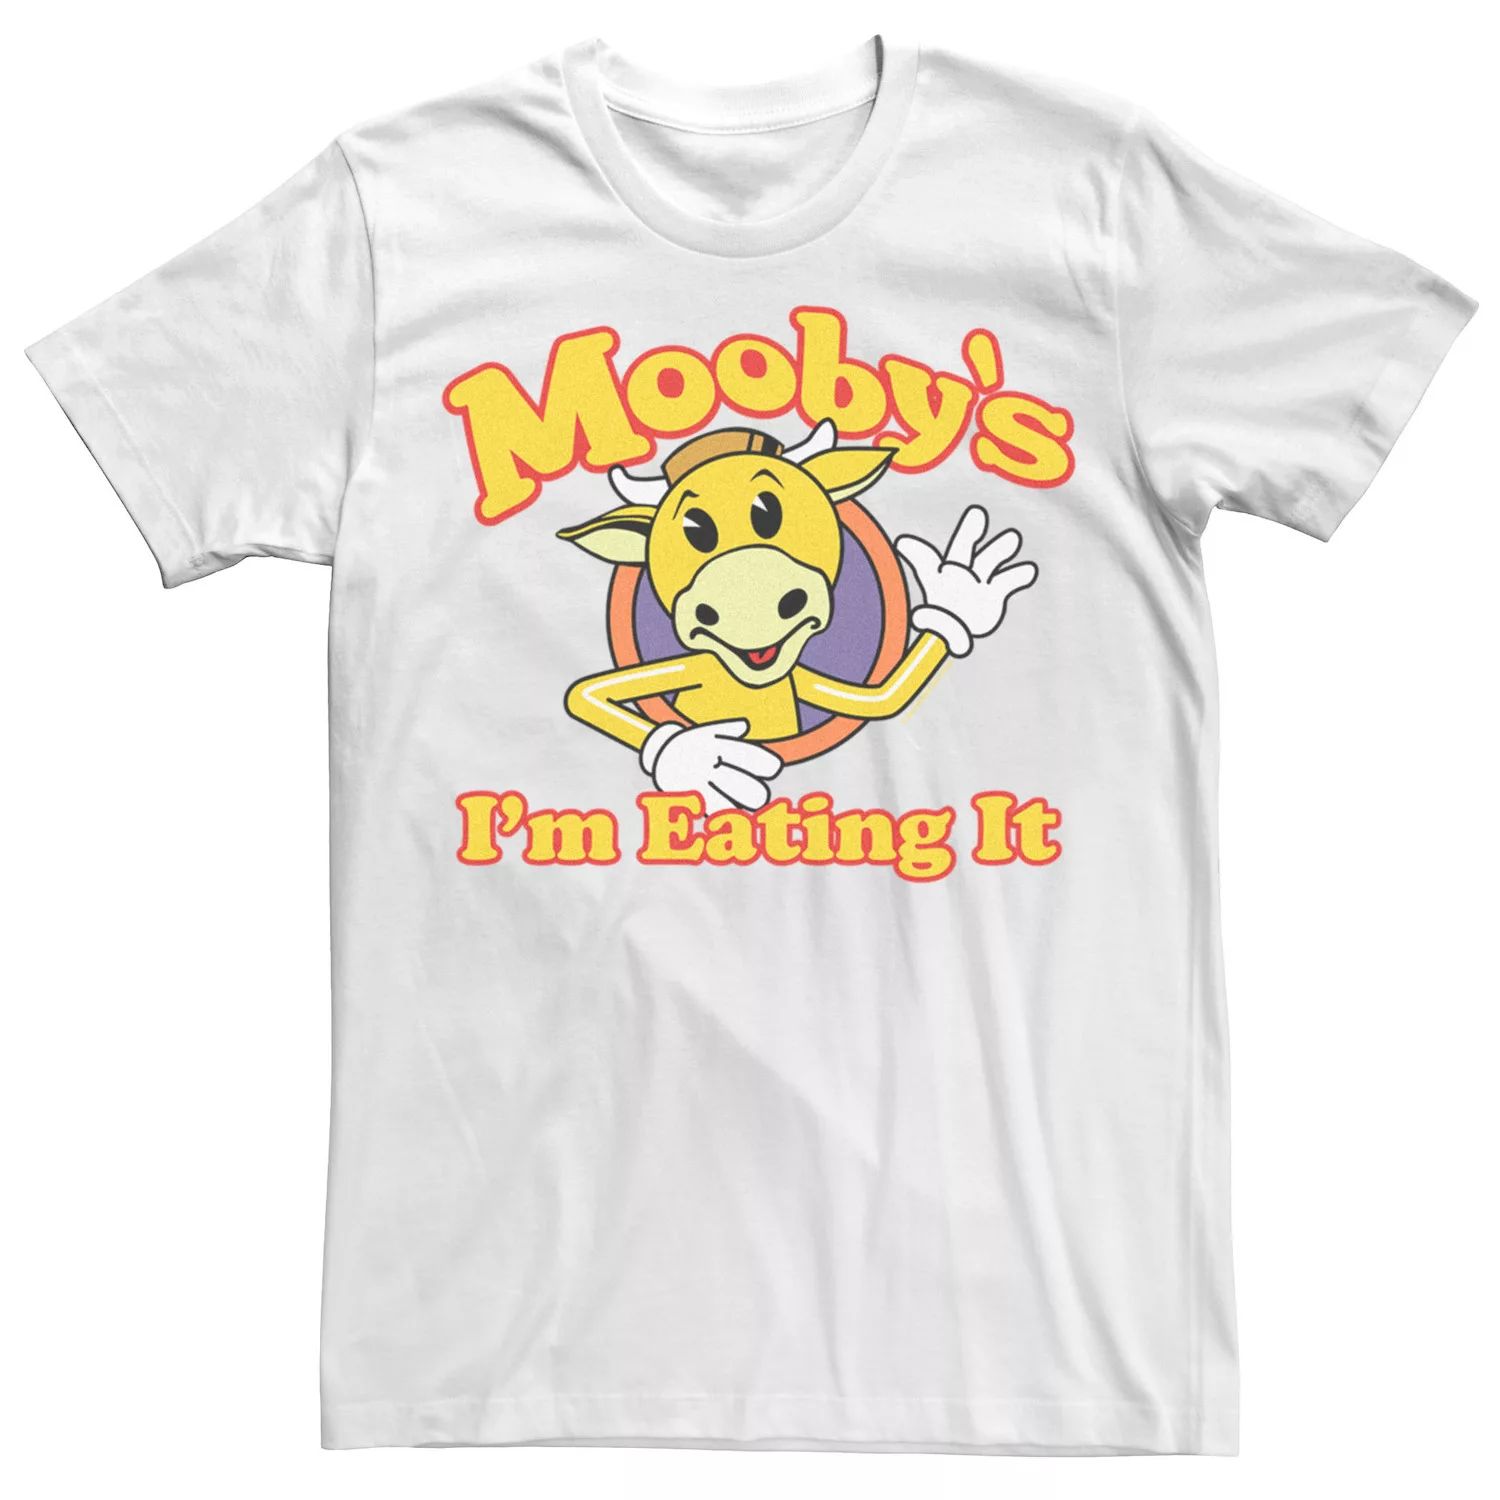 Мужская футболка Jay And Silent Bob Mooby's I'm Eating It с контурным логотипом Licensed Character